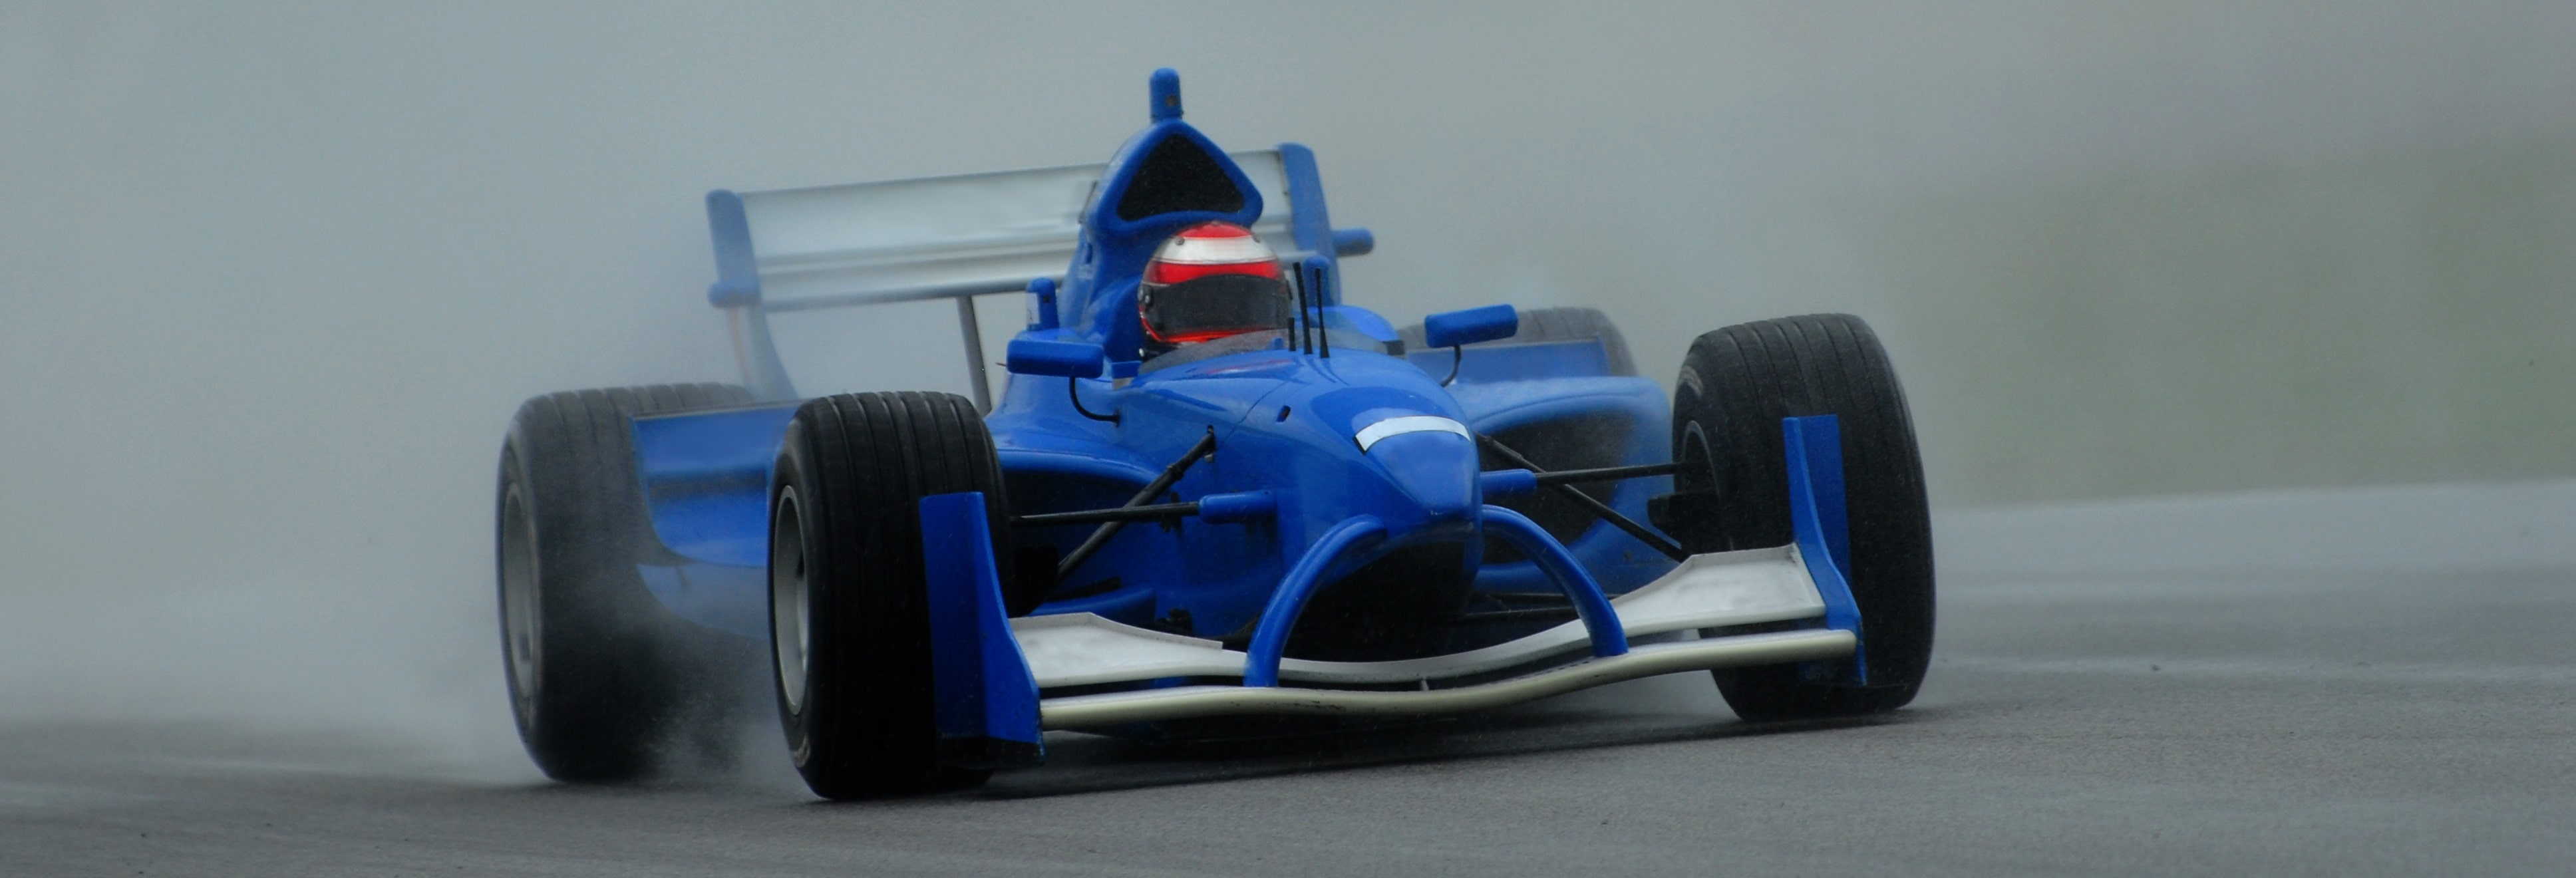 Grand Prix Race in Monaco